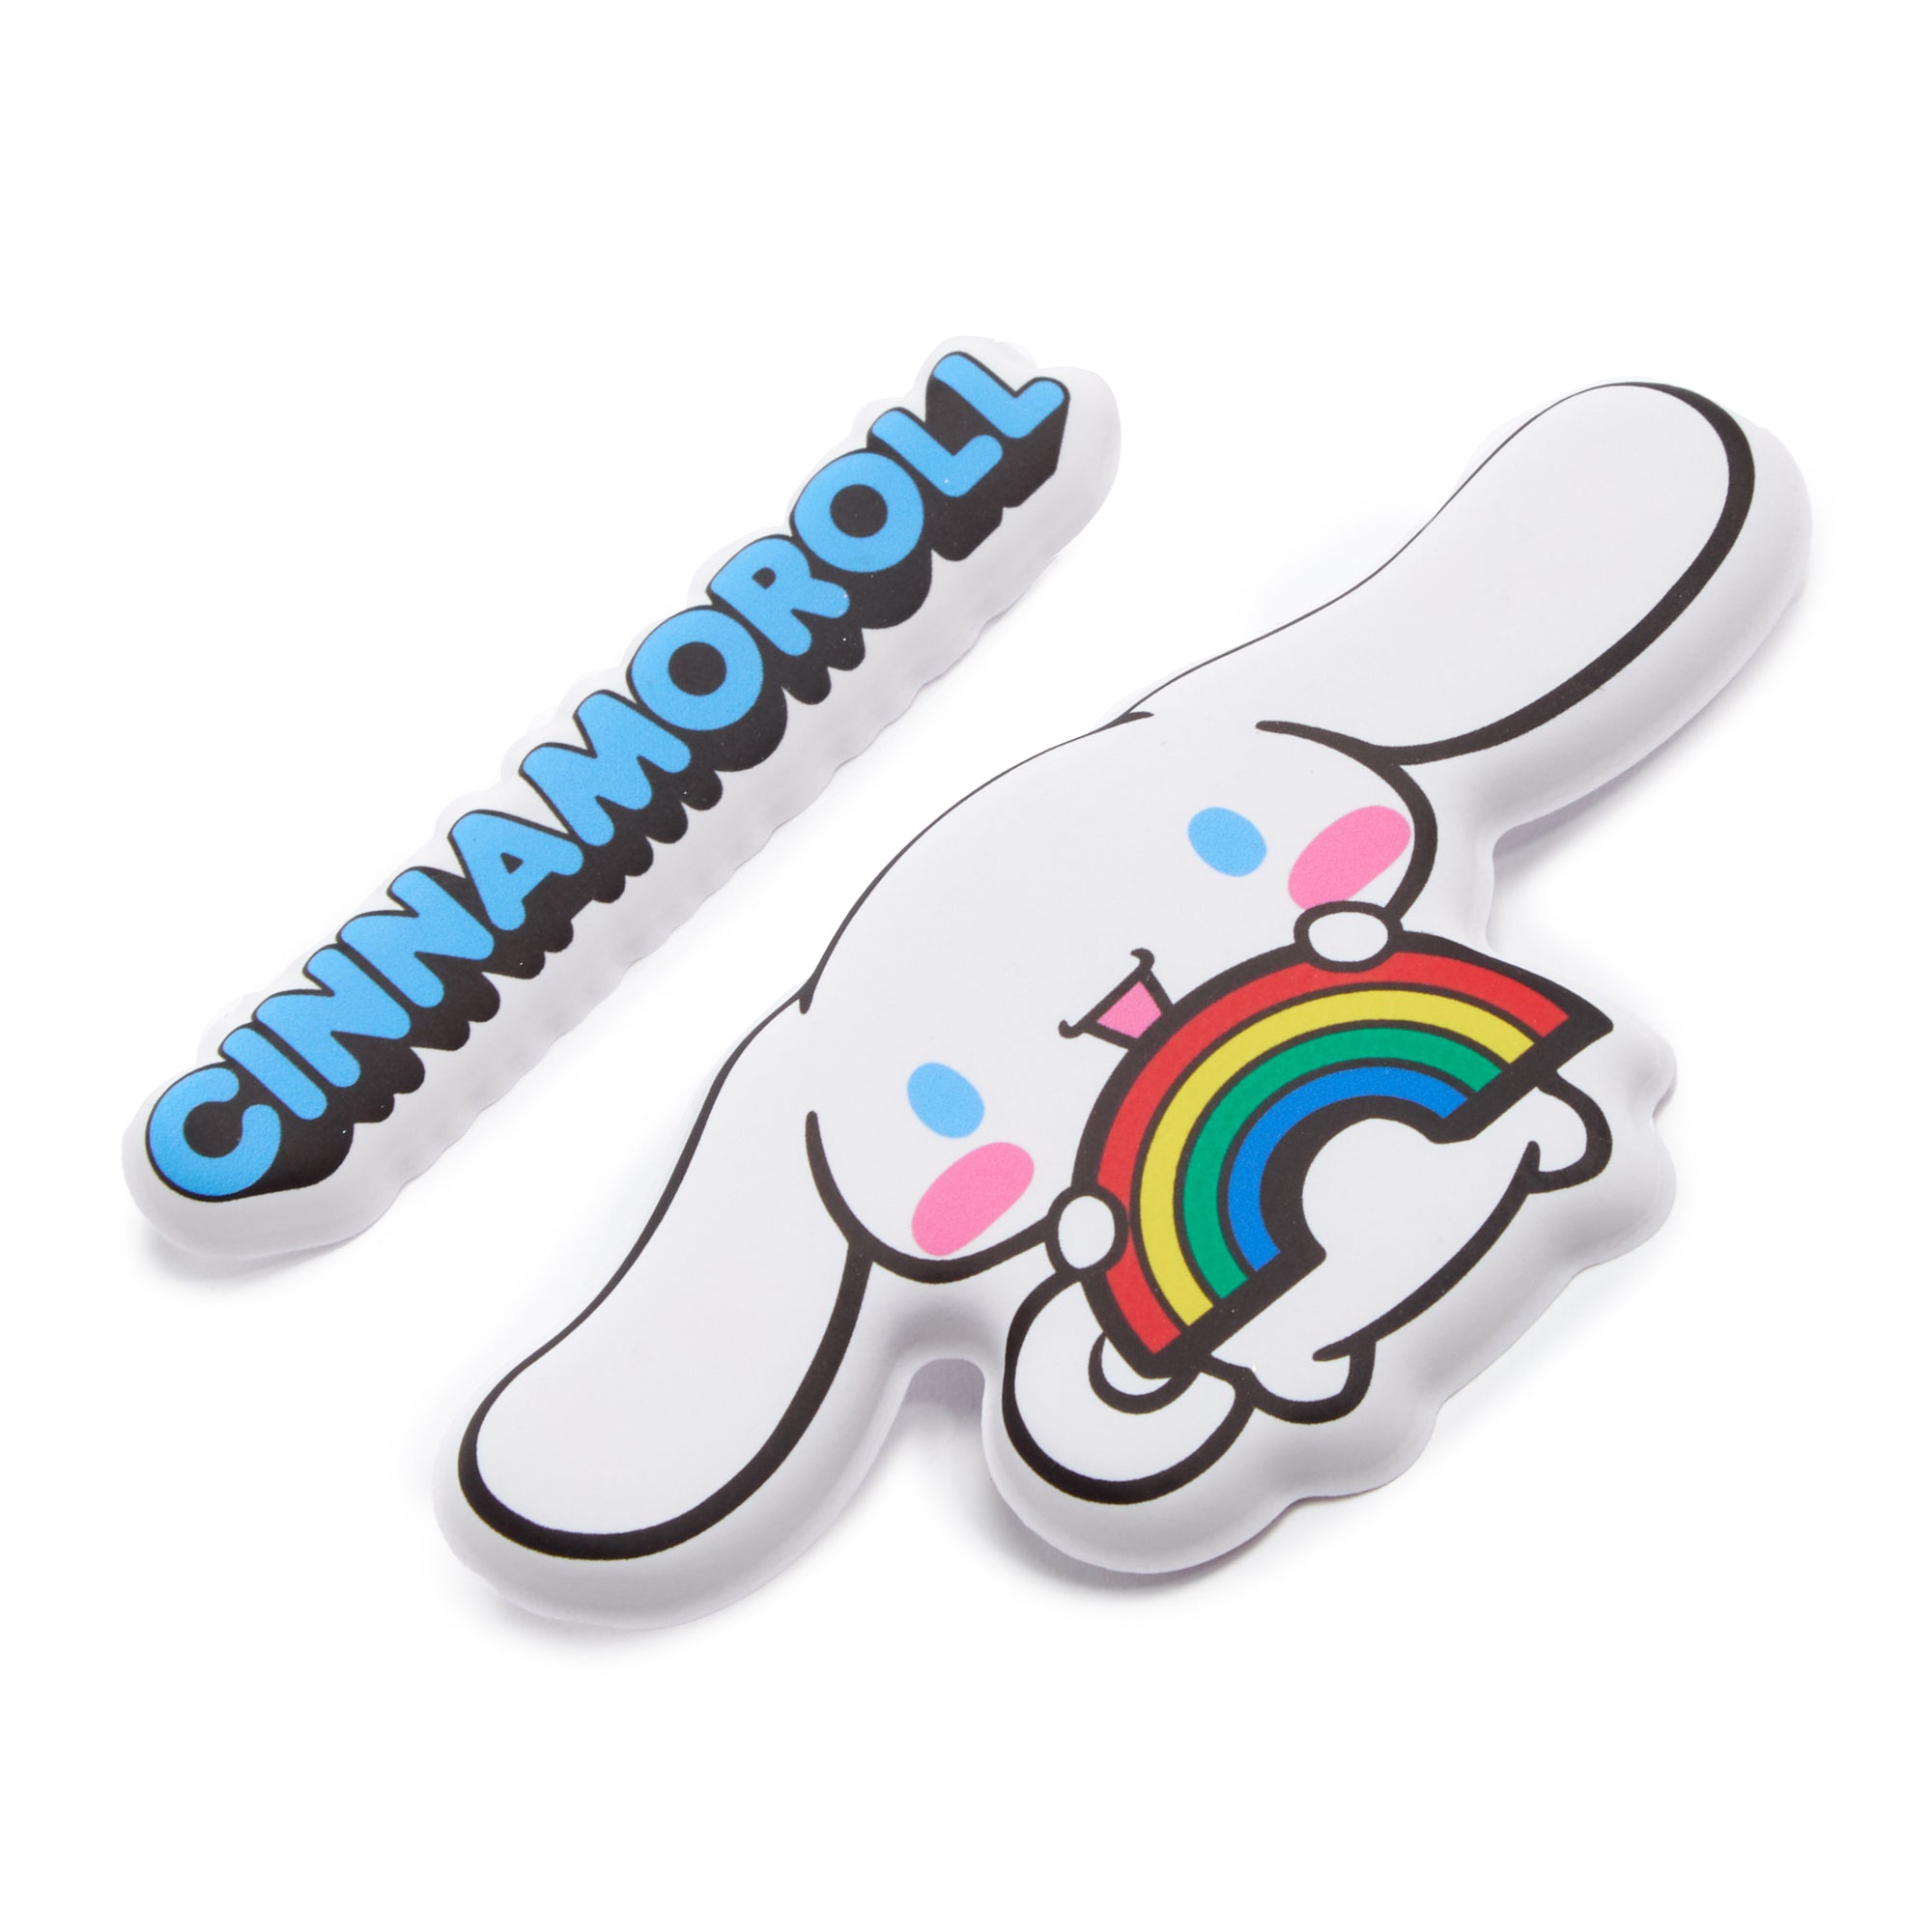 Cinnamoroll x Pipsticks Big Puffy Sticker Stationery Pipsticks Inc   